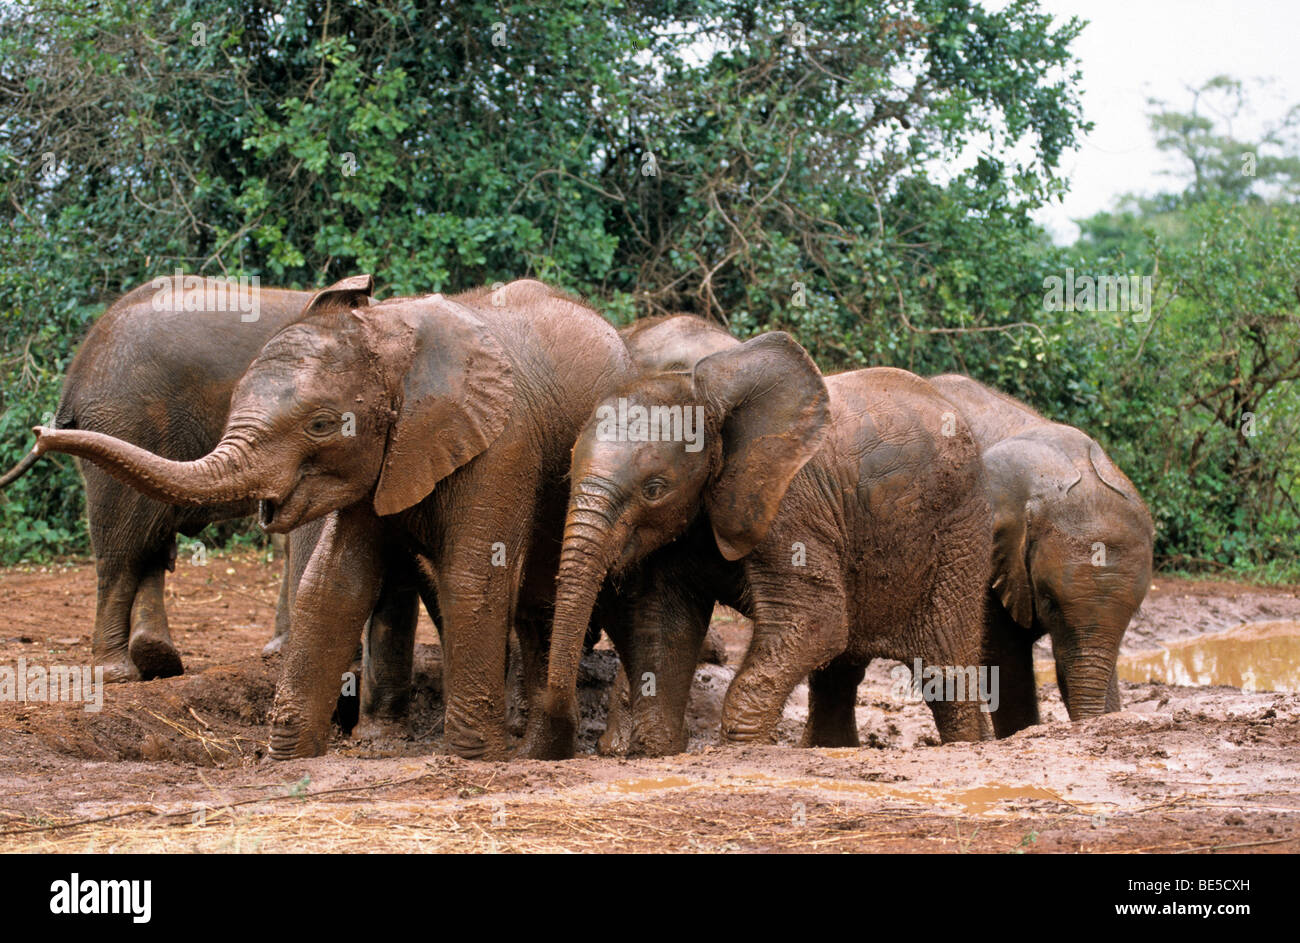 Giovane elefante africano (Loxodonta africana), Sheldrick's l'Orfanotrofio degli Elefanti, un orfanotrofio per elefanti, Nairobi parco giochi, Kenya, Afr Foto Stock